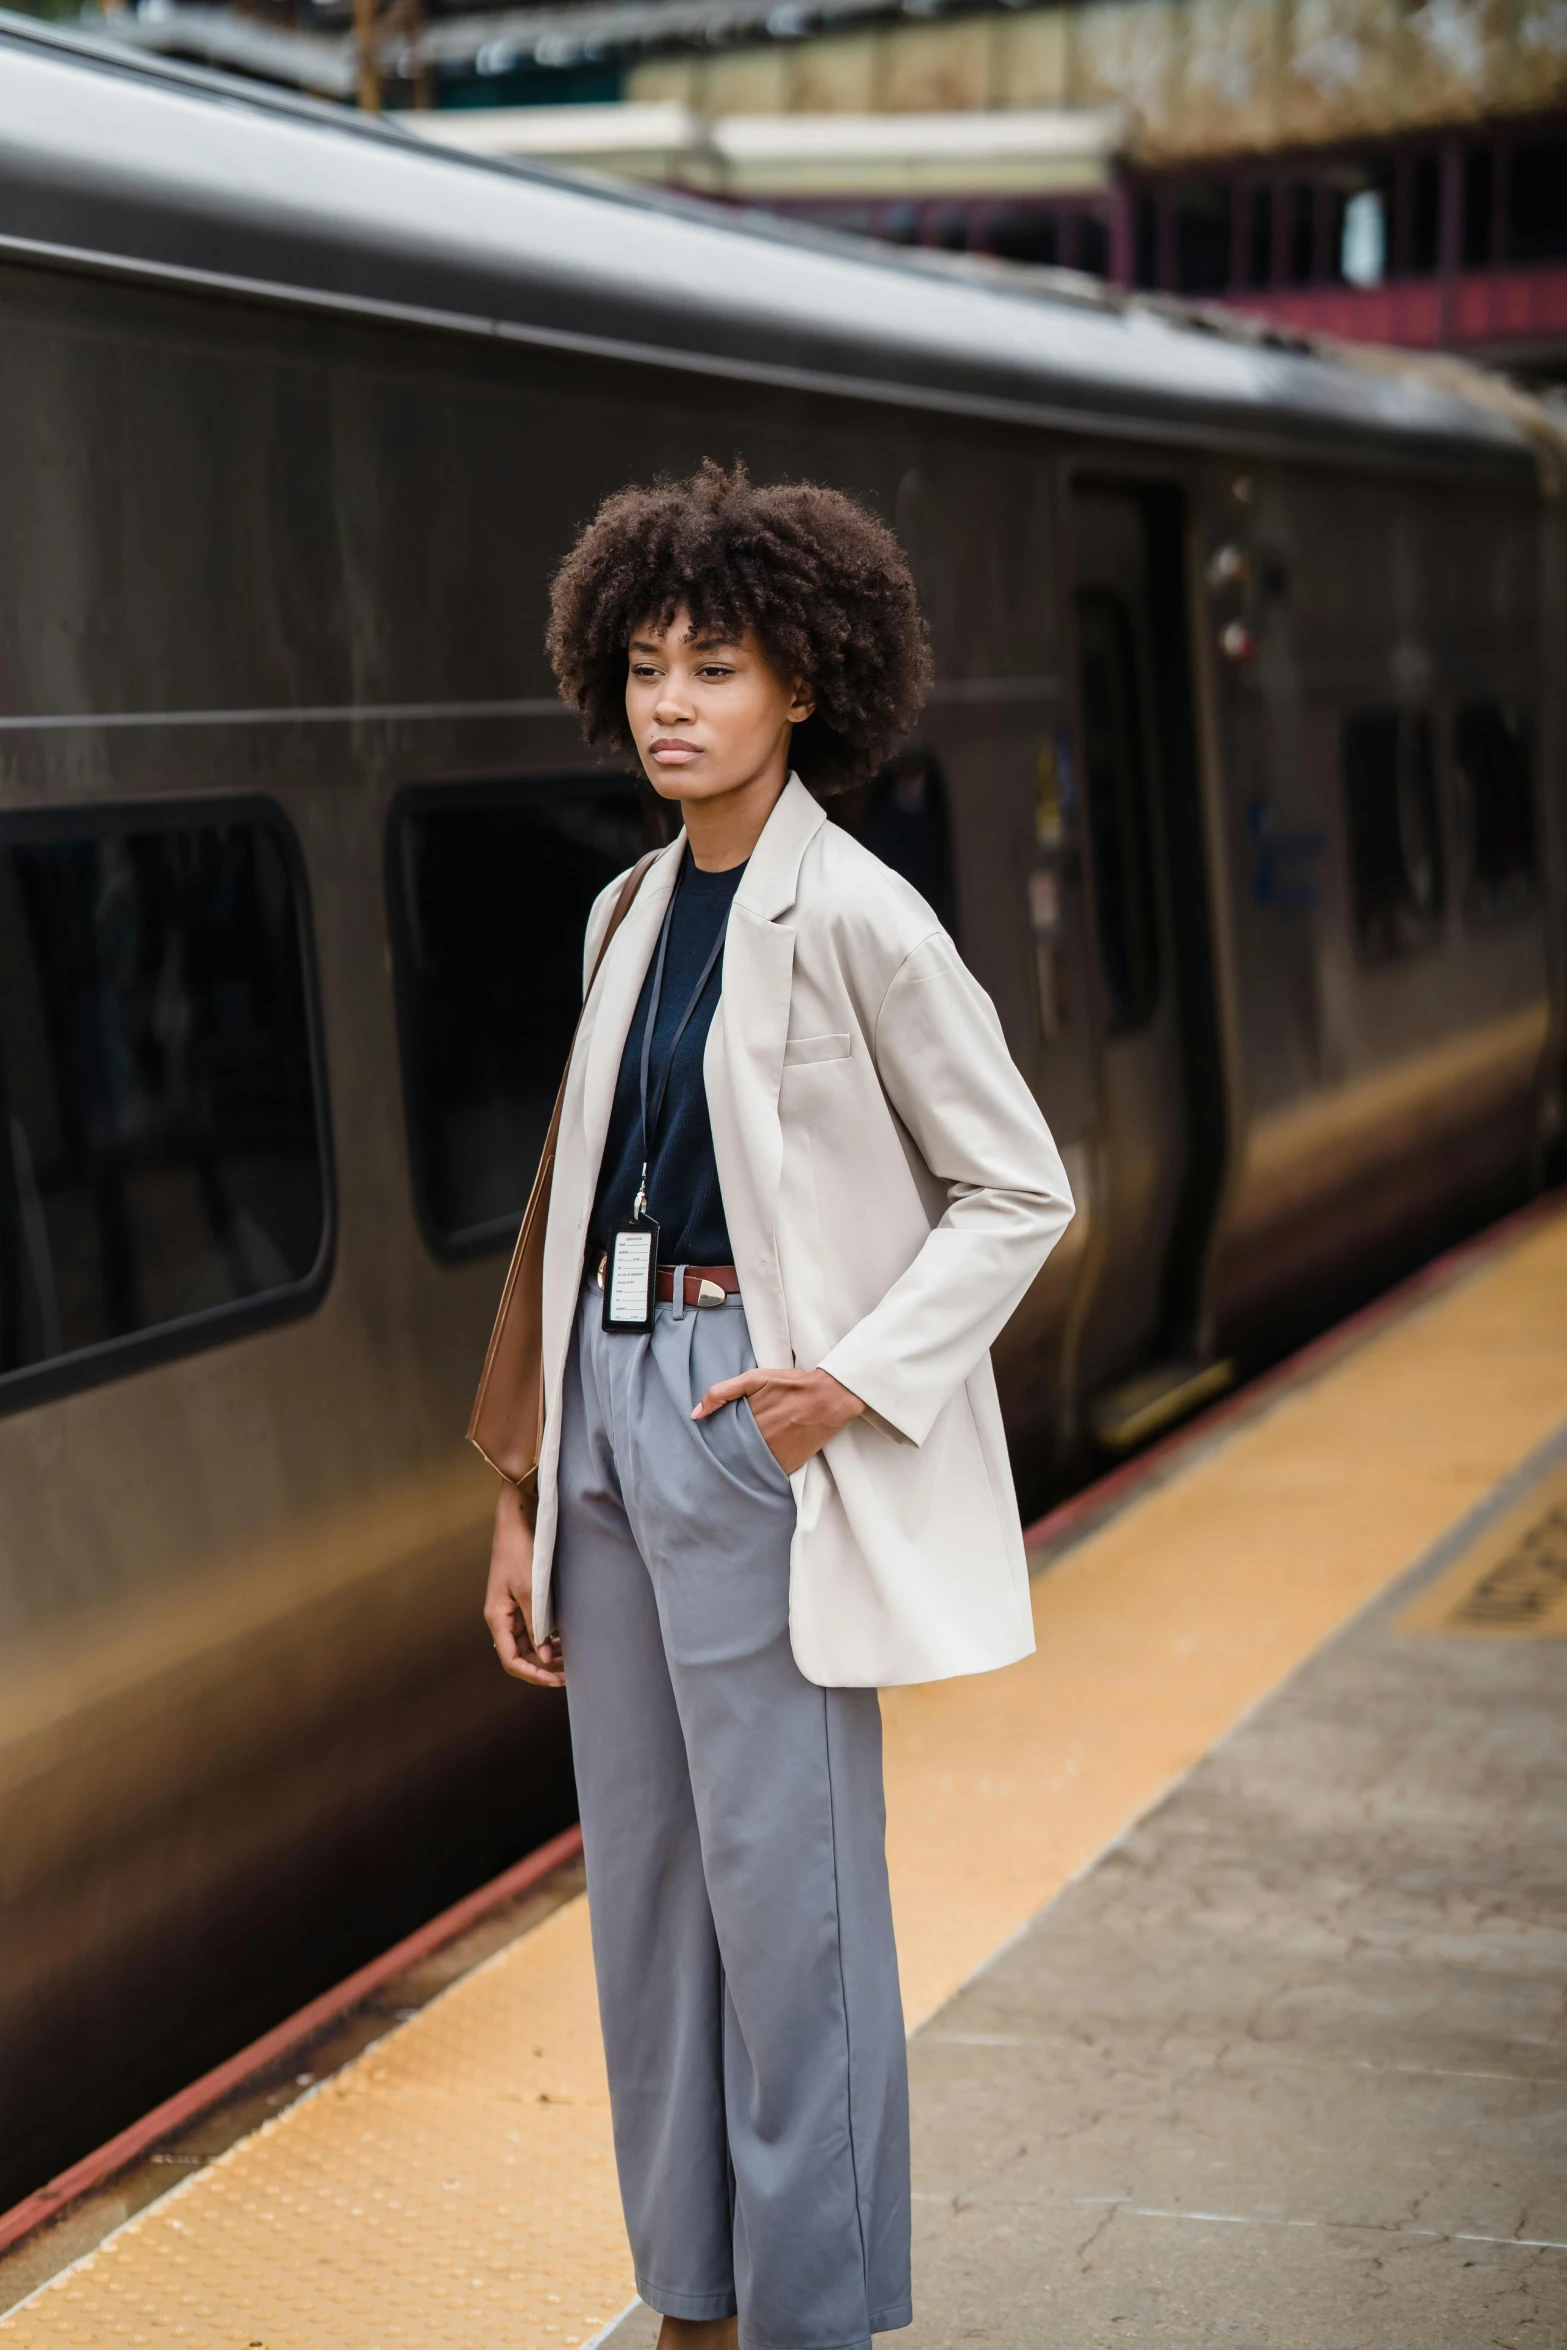 woman standing on train platform next to silver train